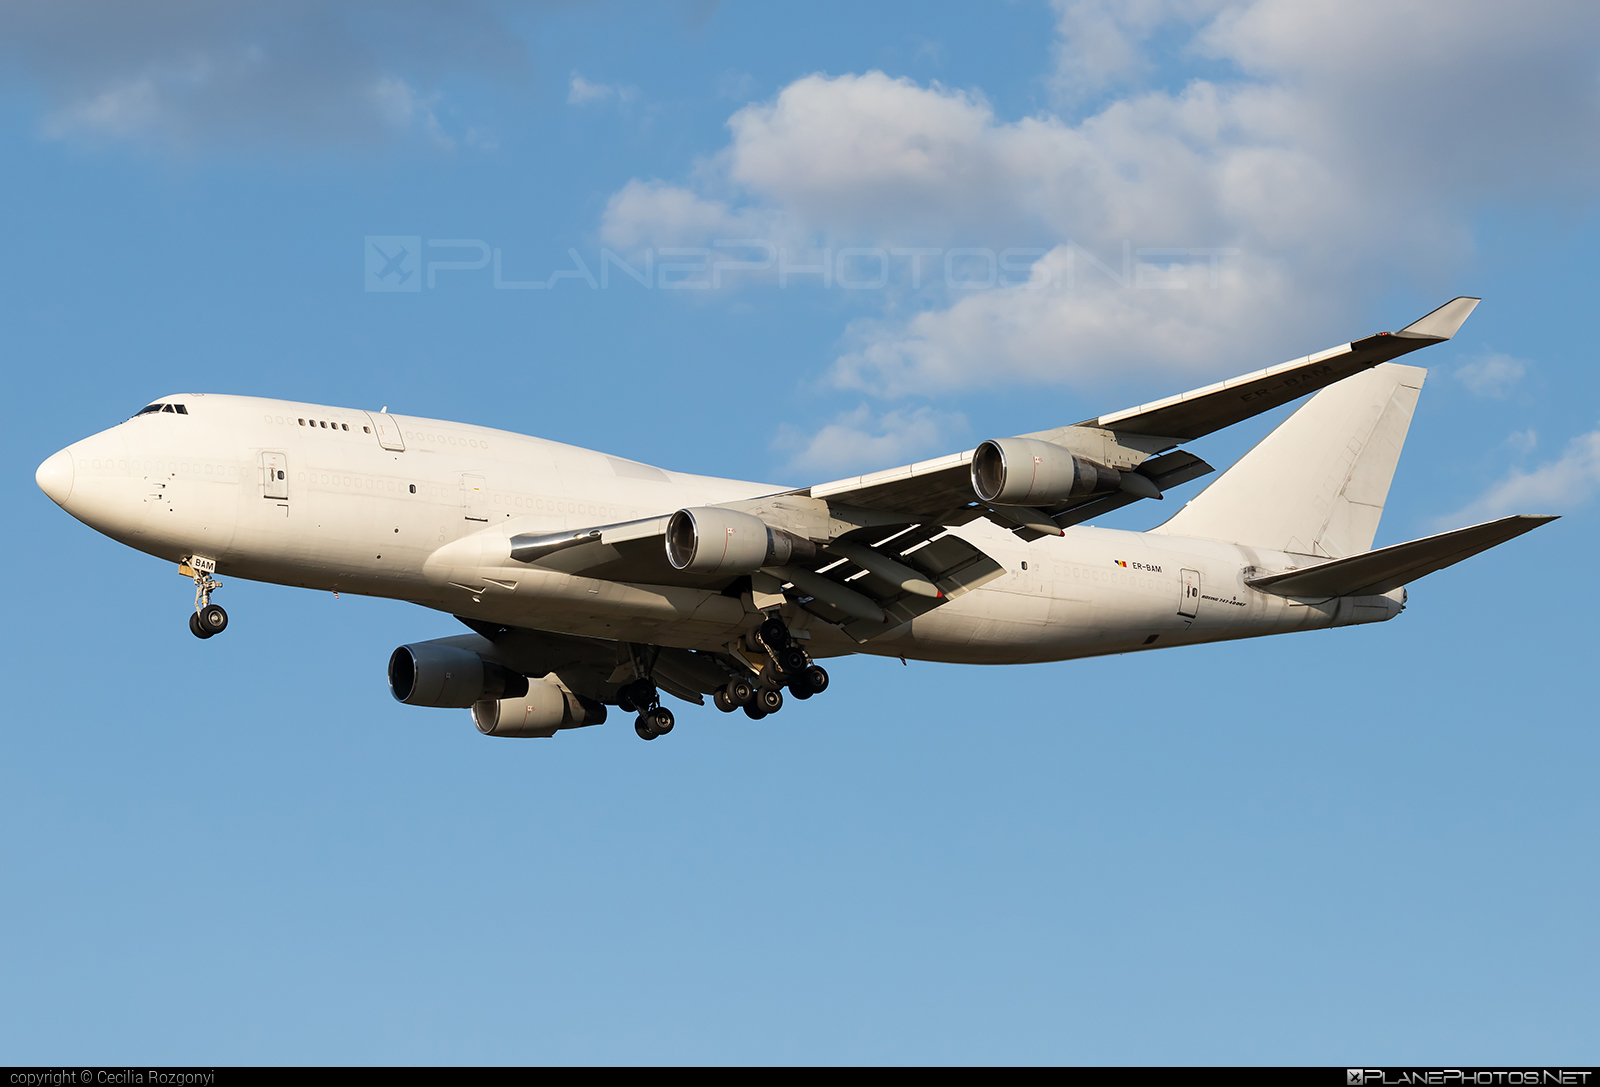 Boeing 747-400BDSF - ER-BAM operated by Aerotrans Cargo #aerotranscargo #b747 #b747bdsf #b747freighter #bedekspecialfreighter #boeing #boeing747 #jumbo